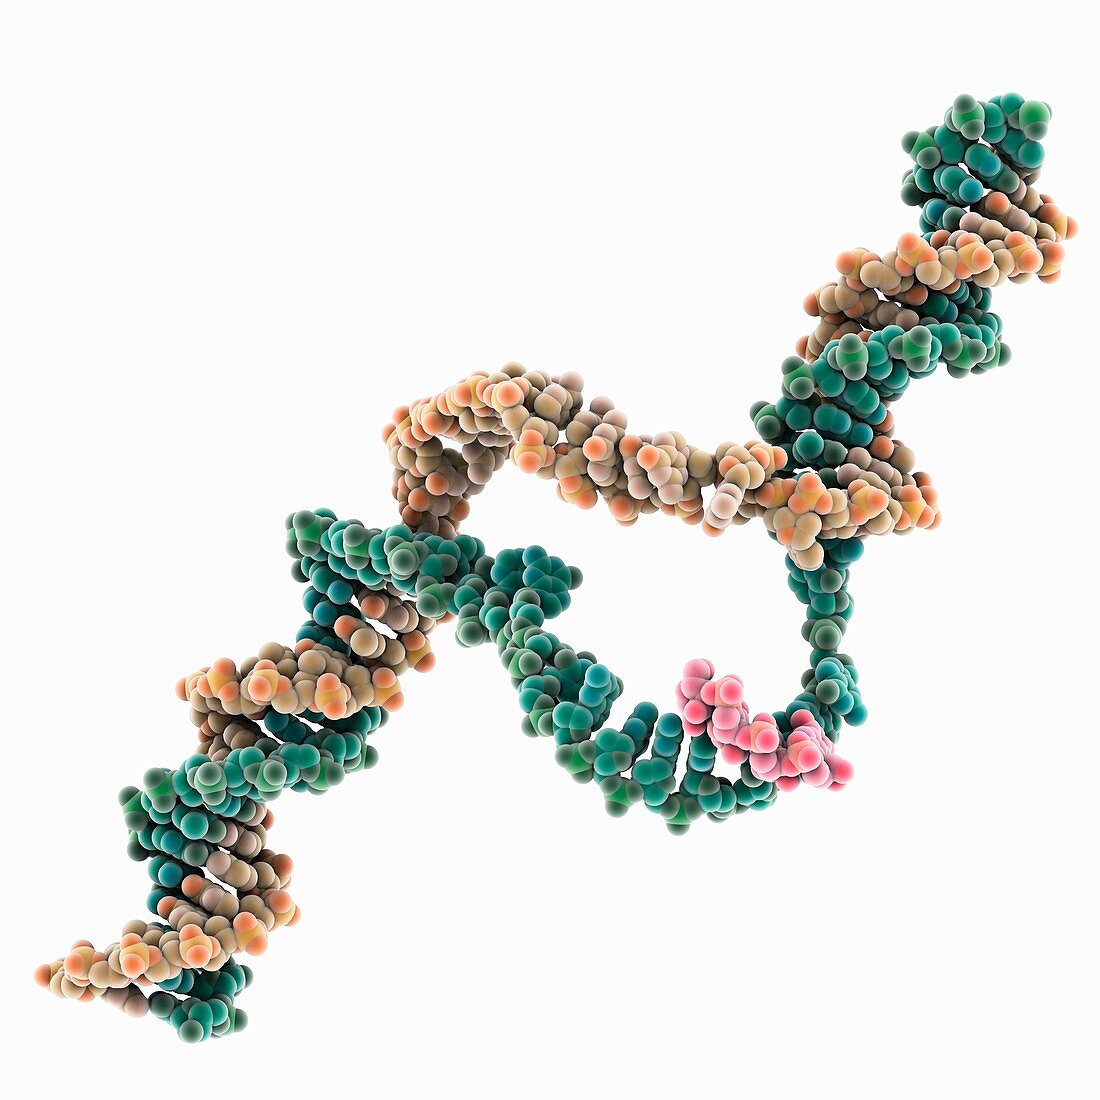 RNA polymerase transcribing complex, molecular model